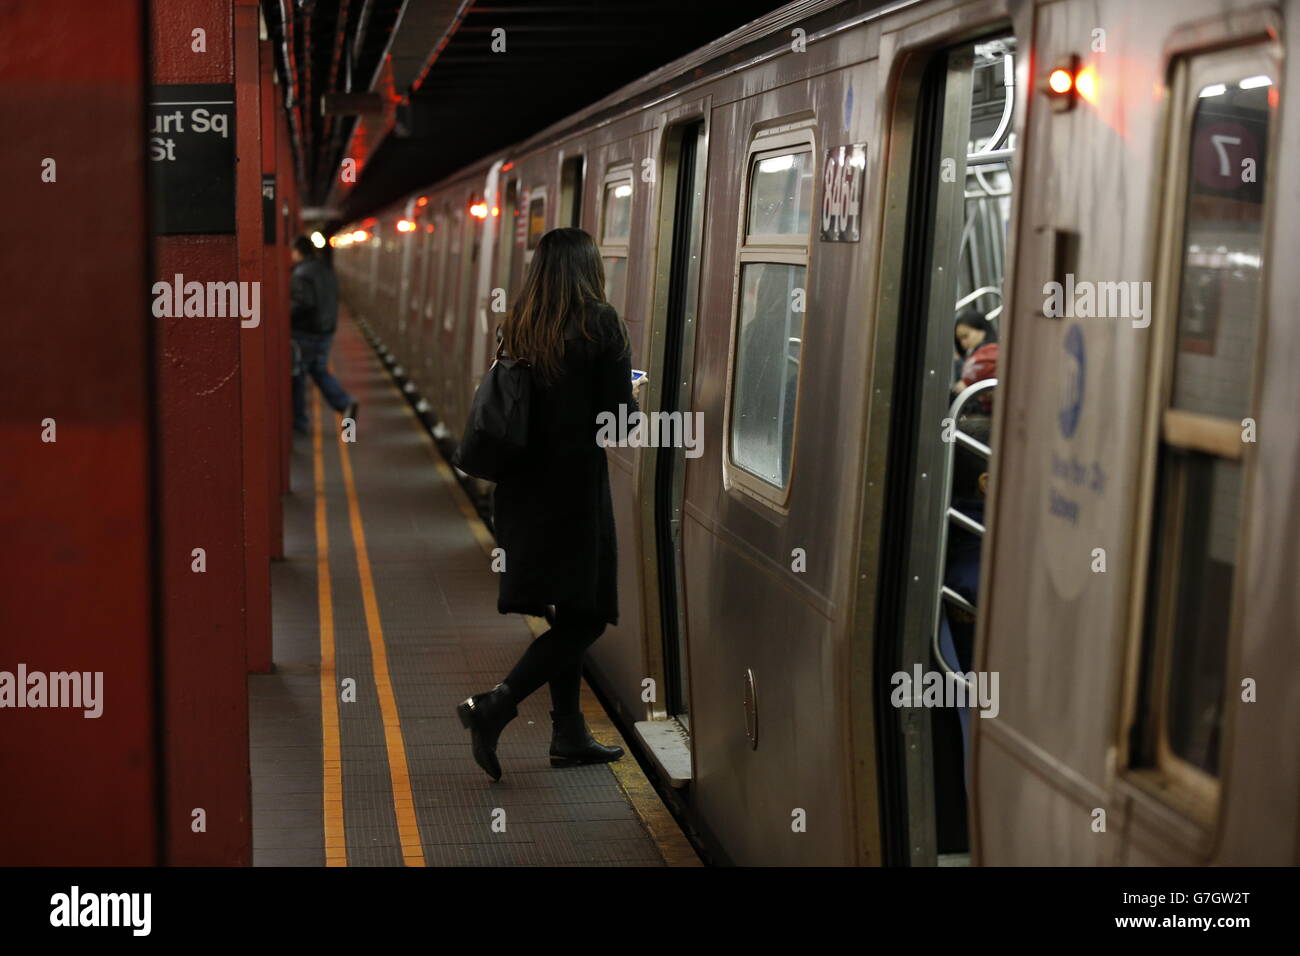 City views - New York City. Stock photo of New York City MTA subway metro. Stock Photo